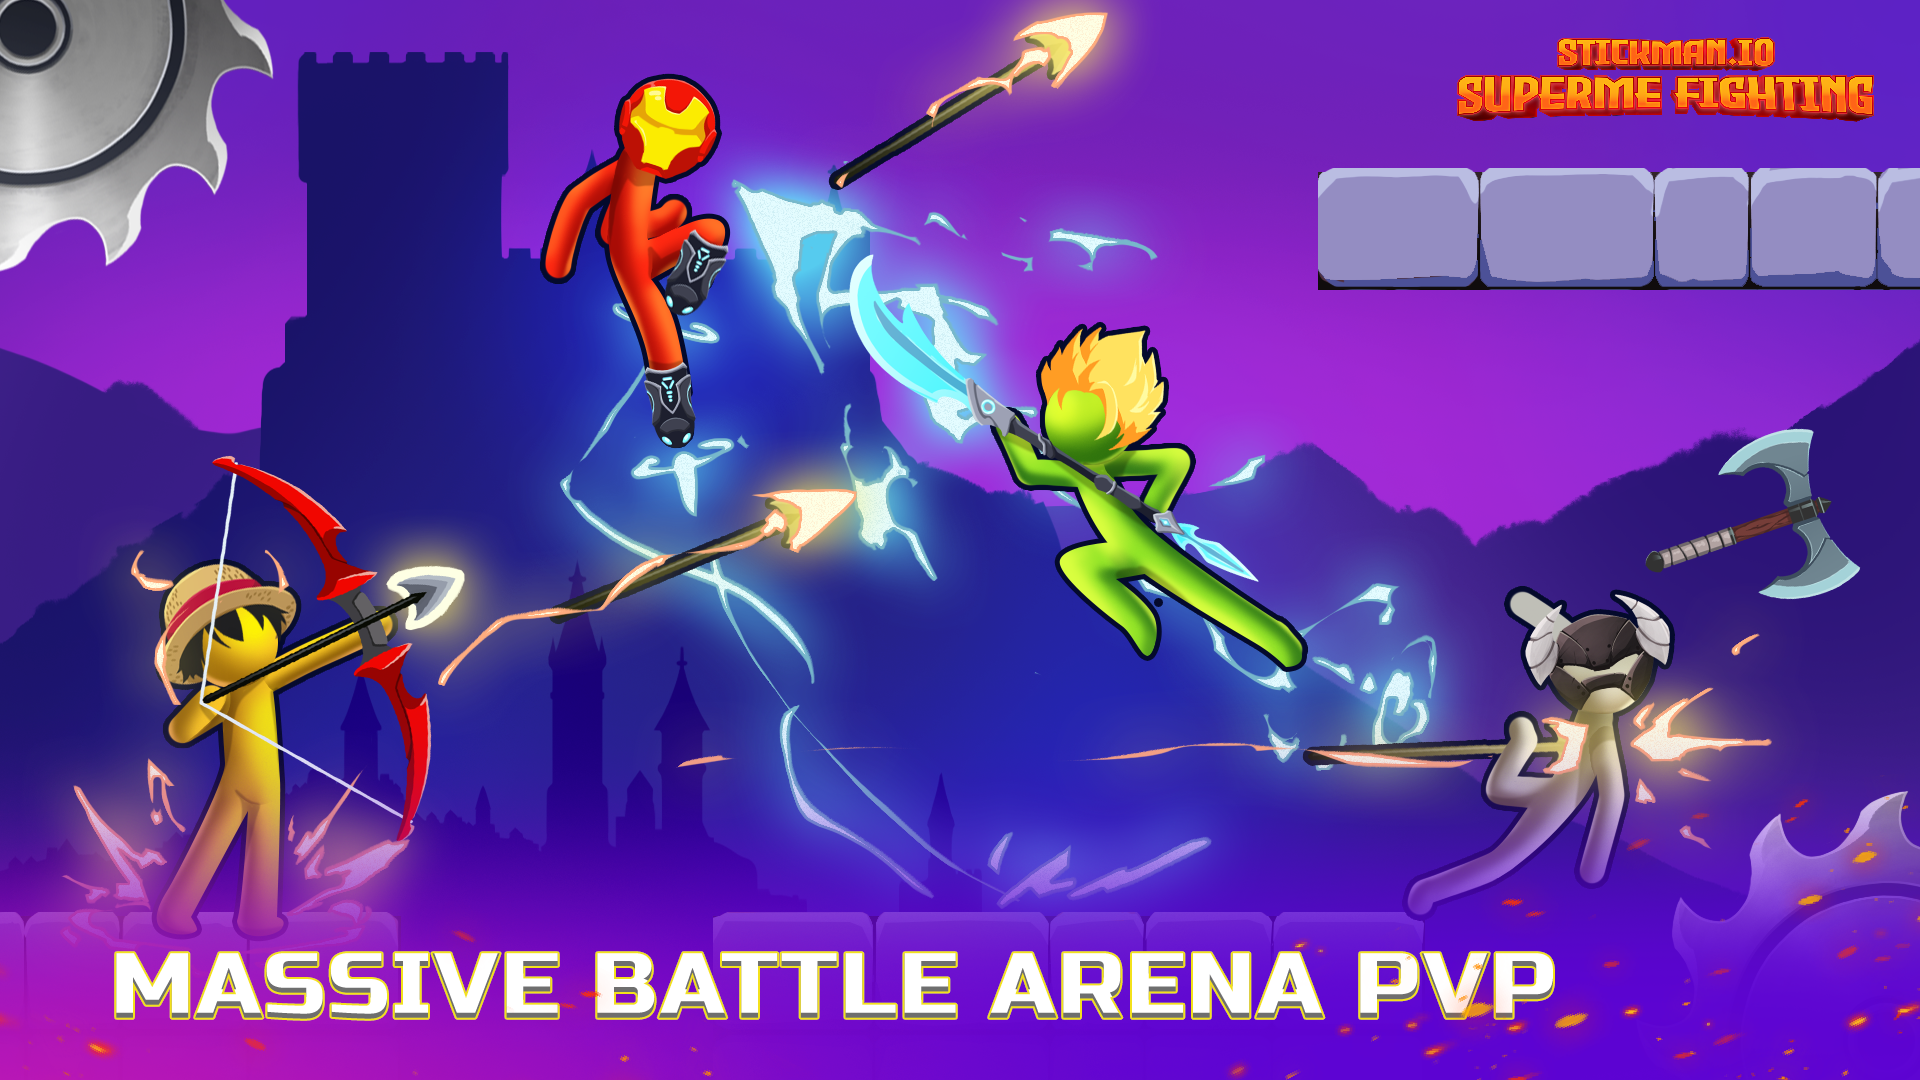 Supreme Stickman Fight Battle - Two Free Download